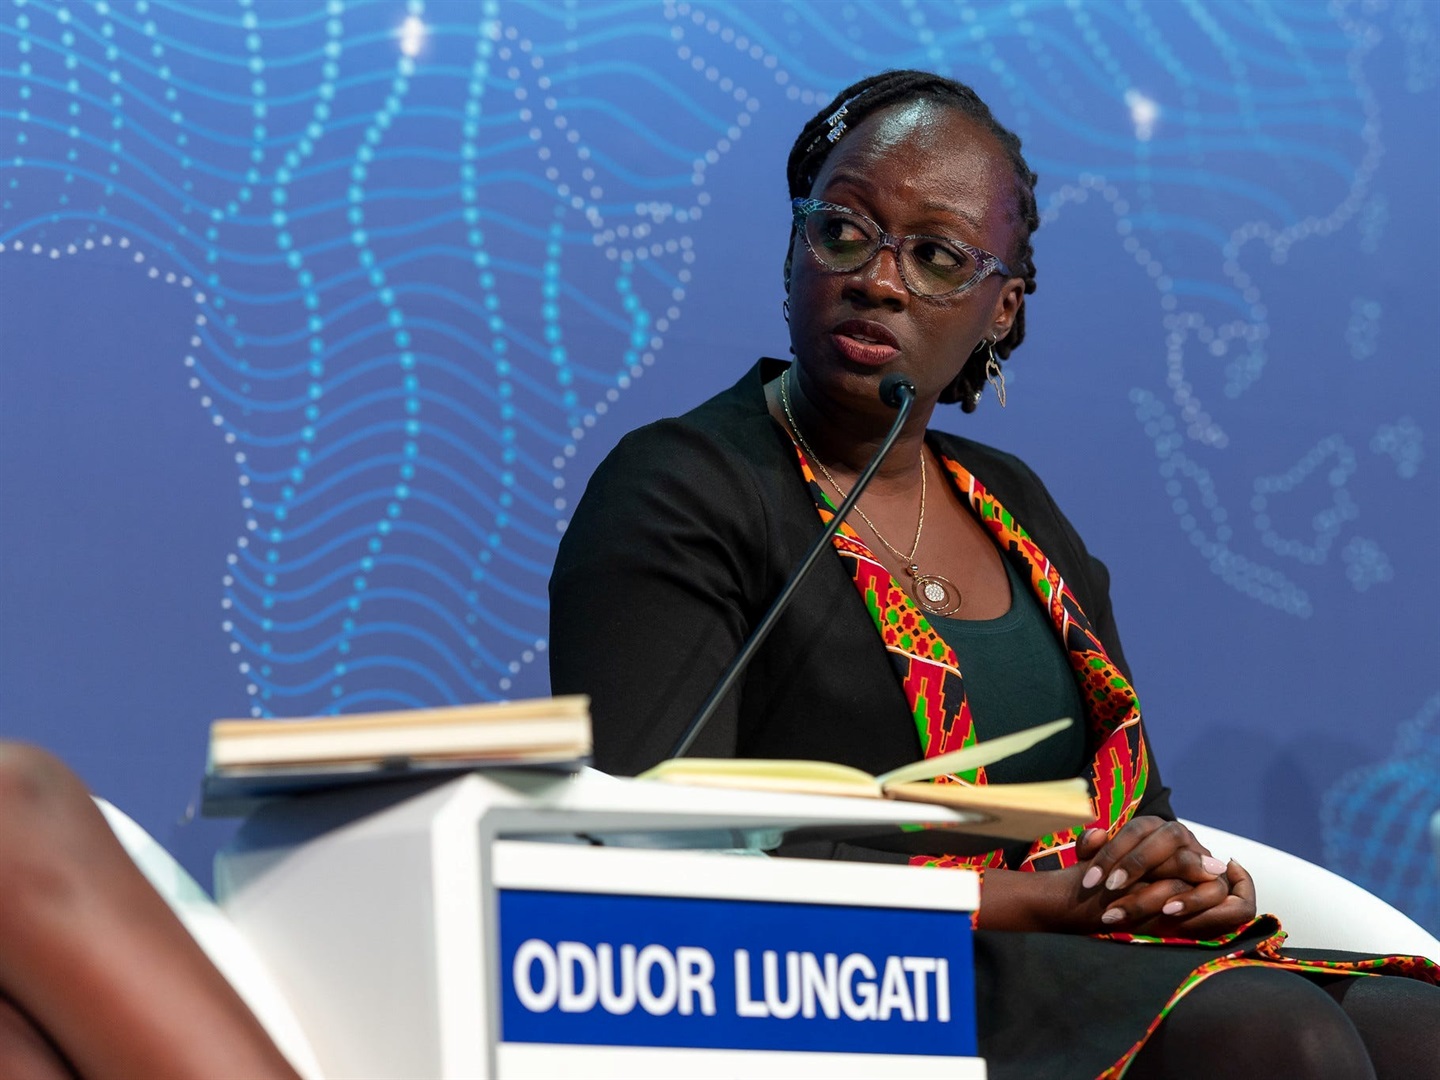 Angela Oduor Lungati, Executive Director, Ushahidi, South Africa, speaking on gender equality at the World Economic Forum in Davos, May 25, 2022. World Economic Forum/Sandra Blaser